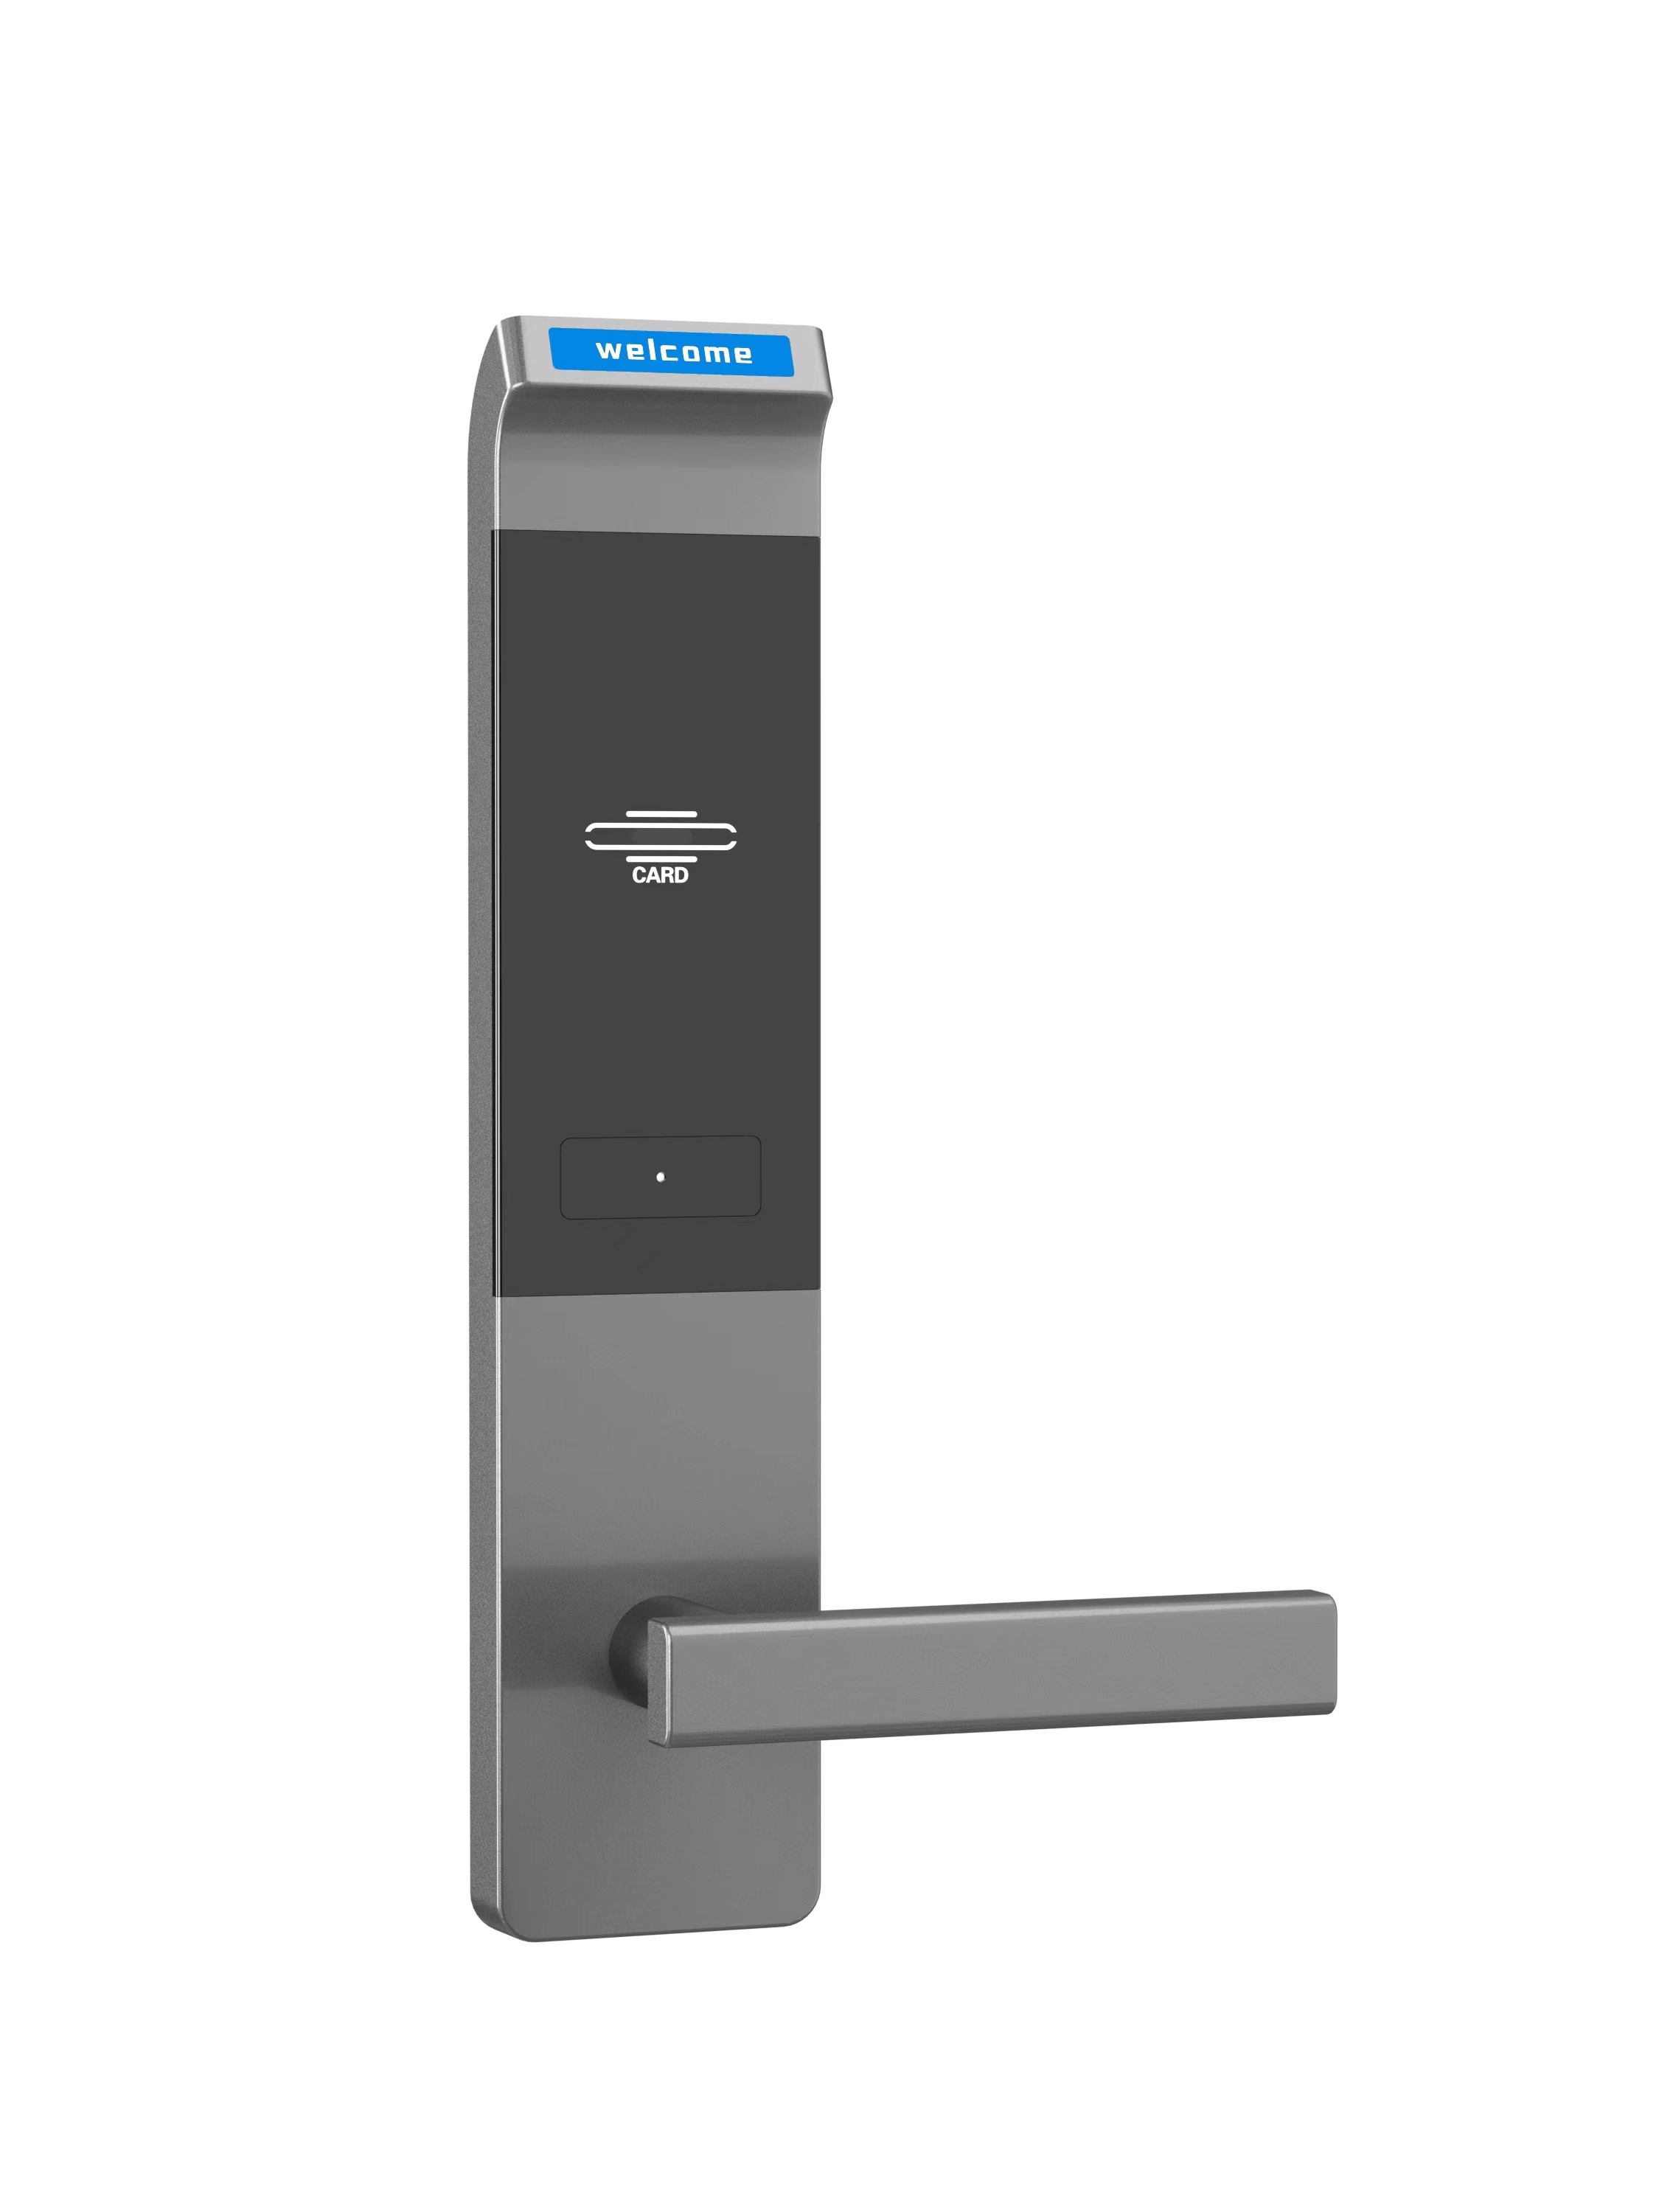 Electric RFID Card Hotel Door Lock with TTHOTEL TTLOCK APP PC Management Software